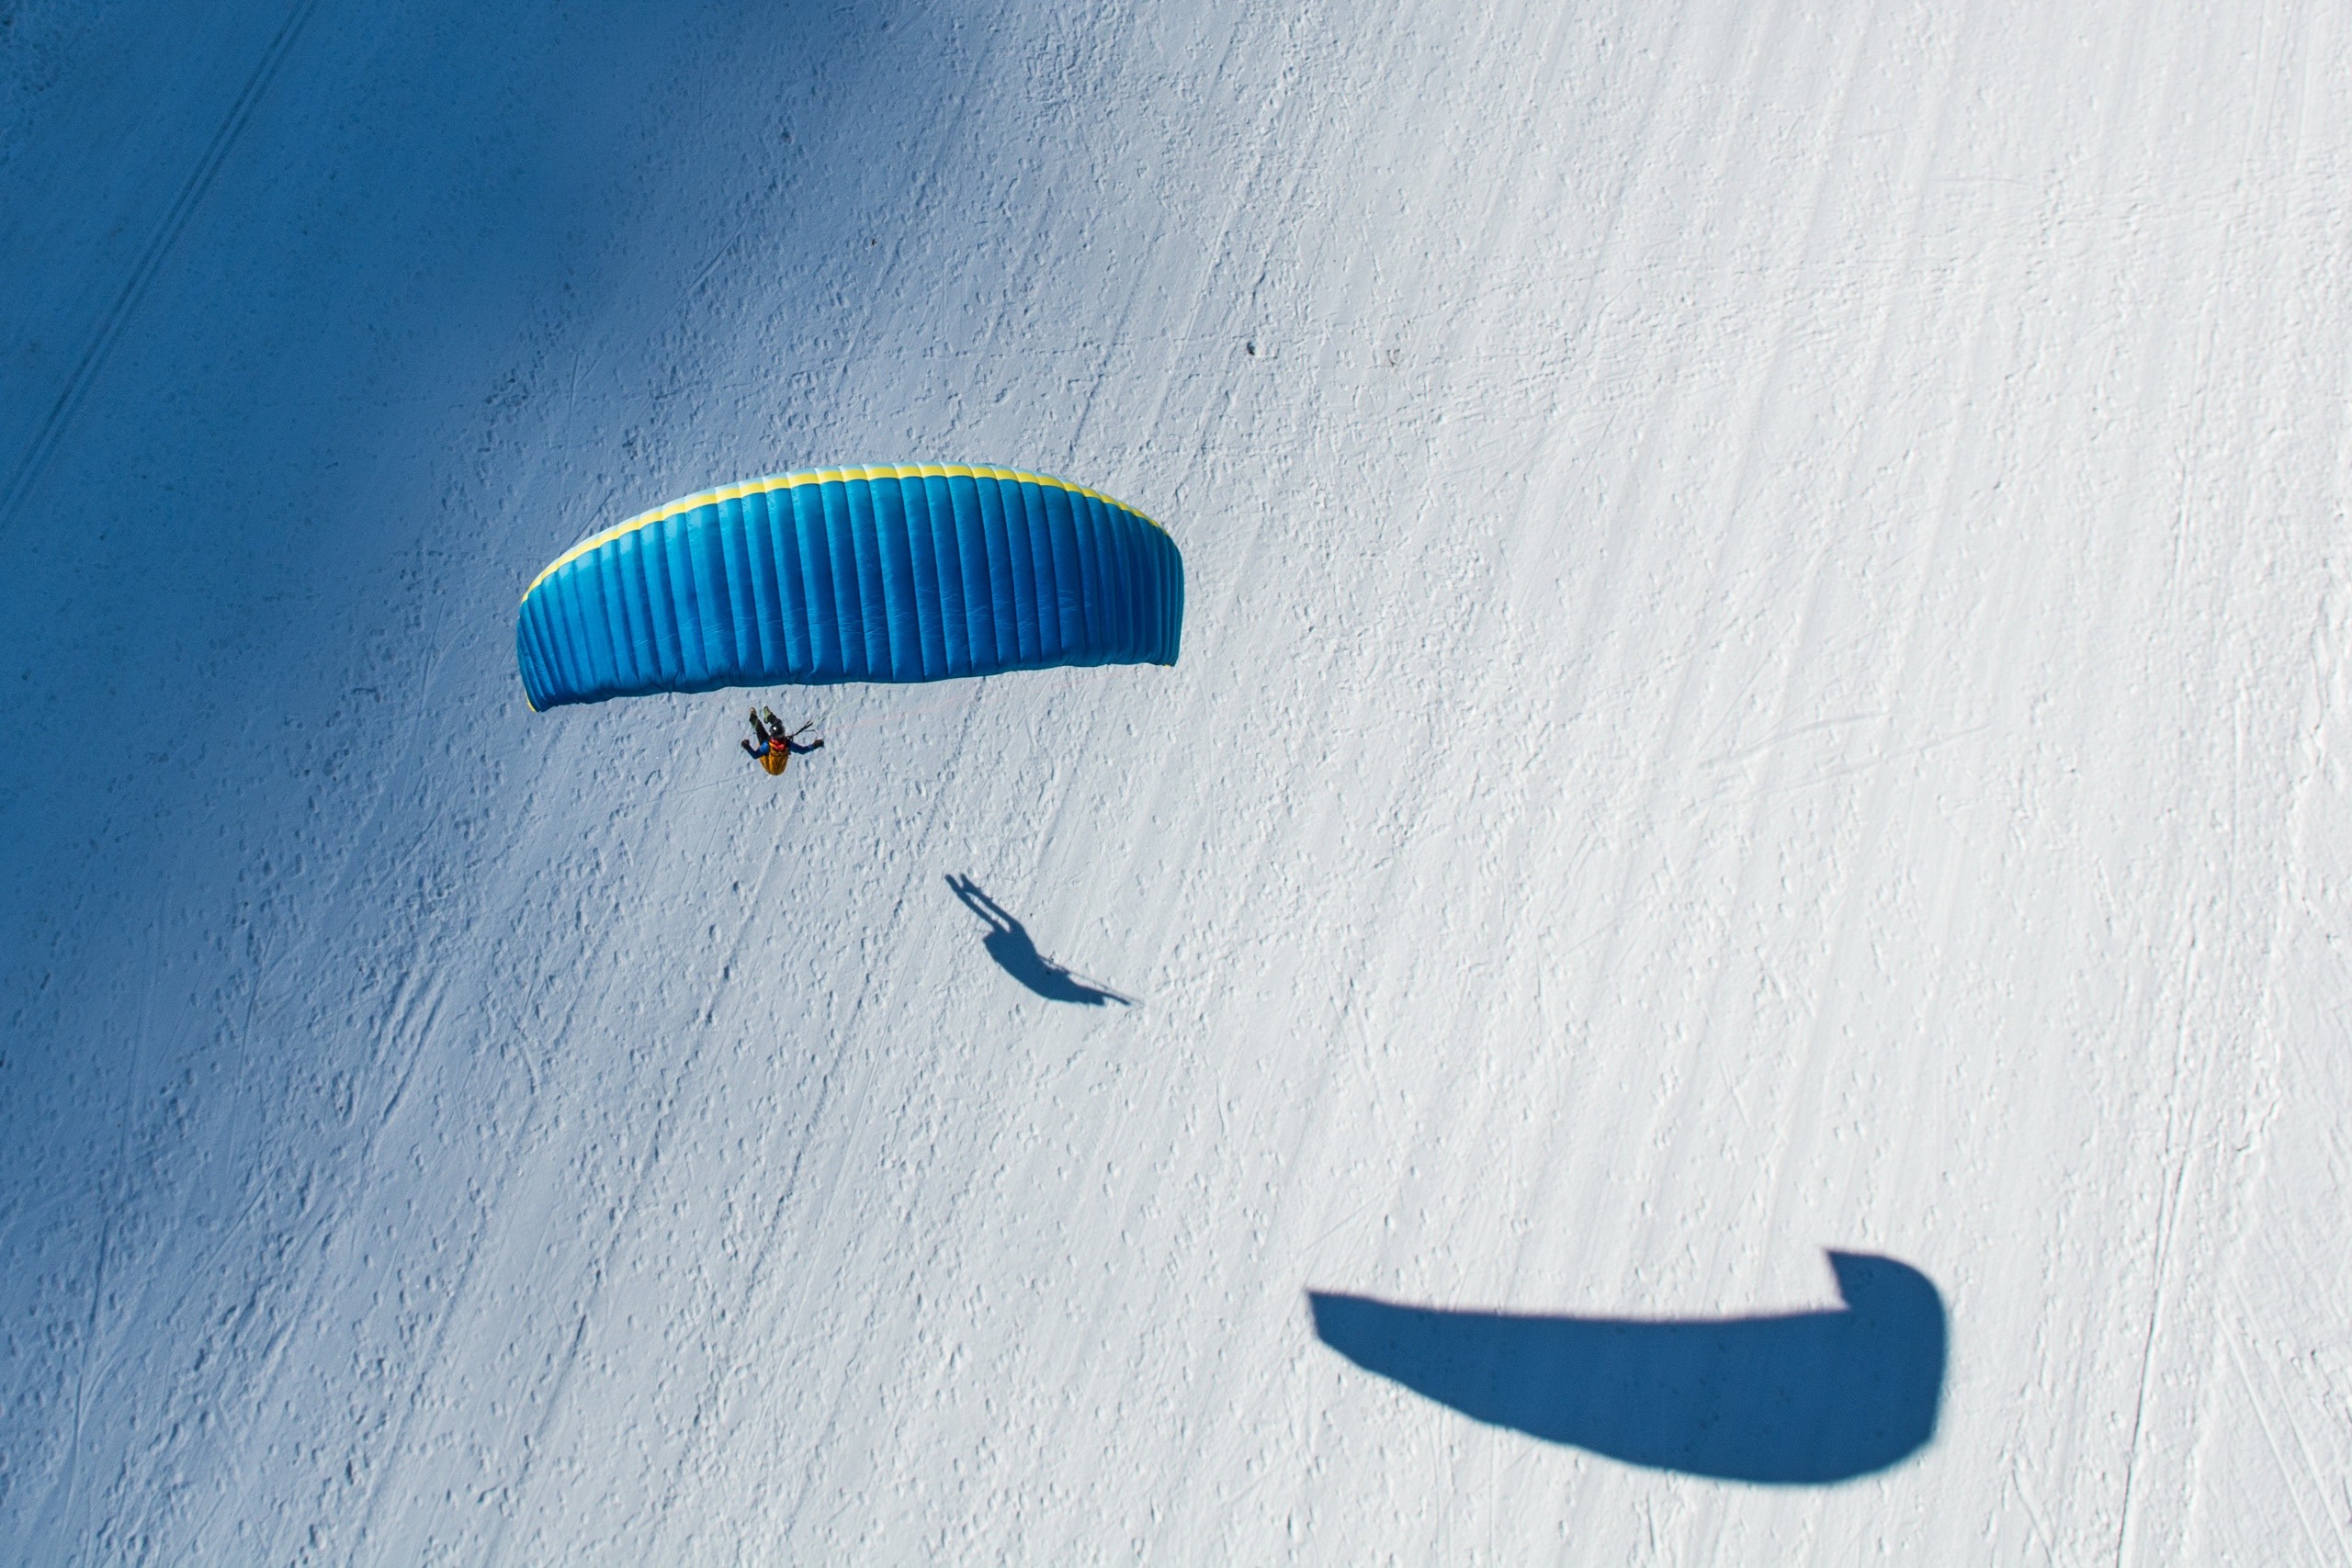 General 2560x1707 snow winter aerial view parachutes